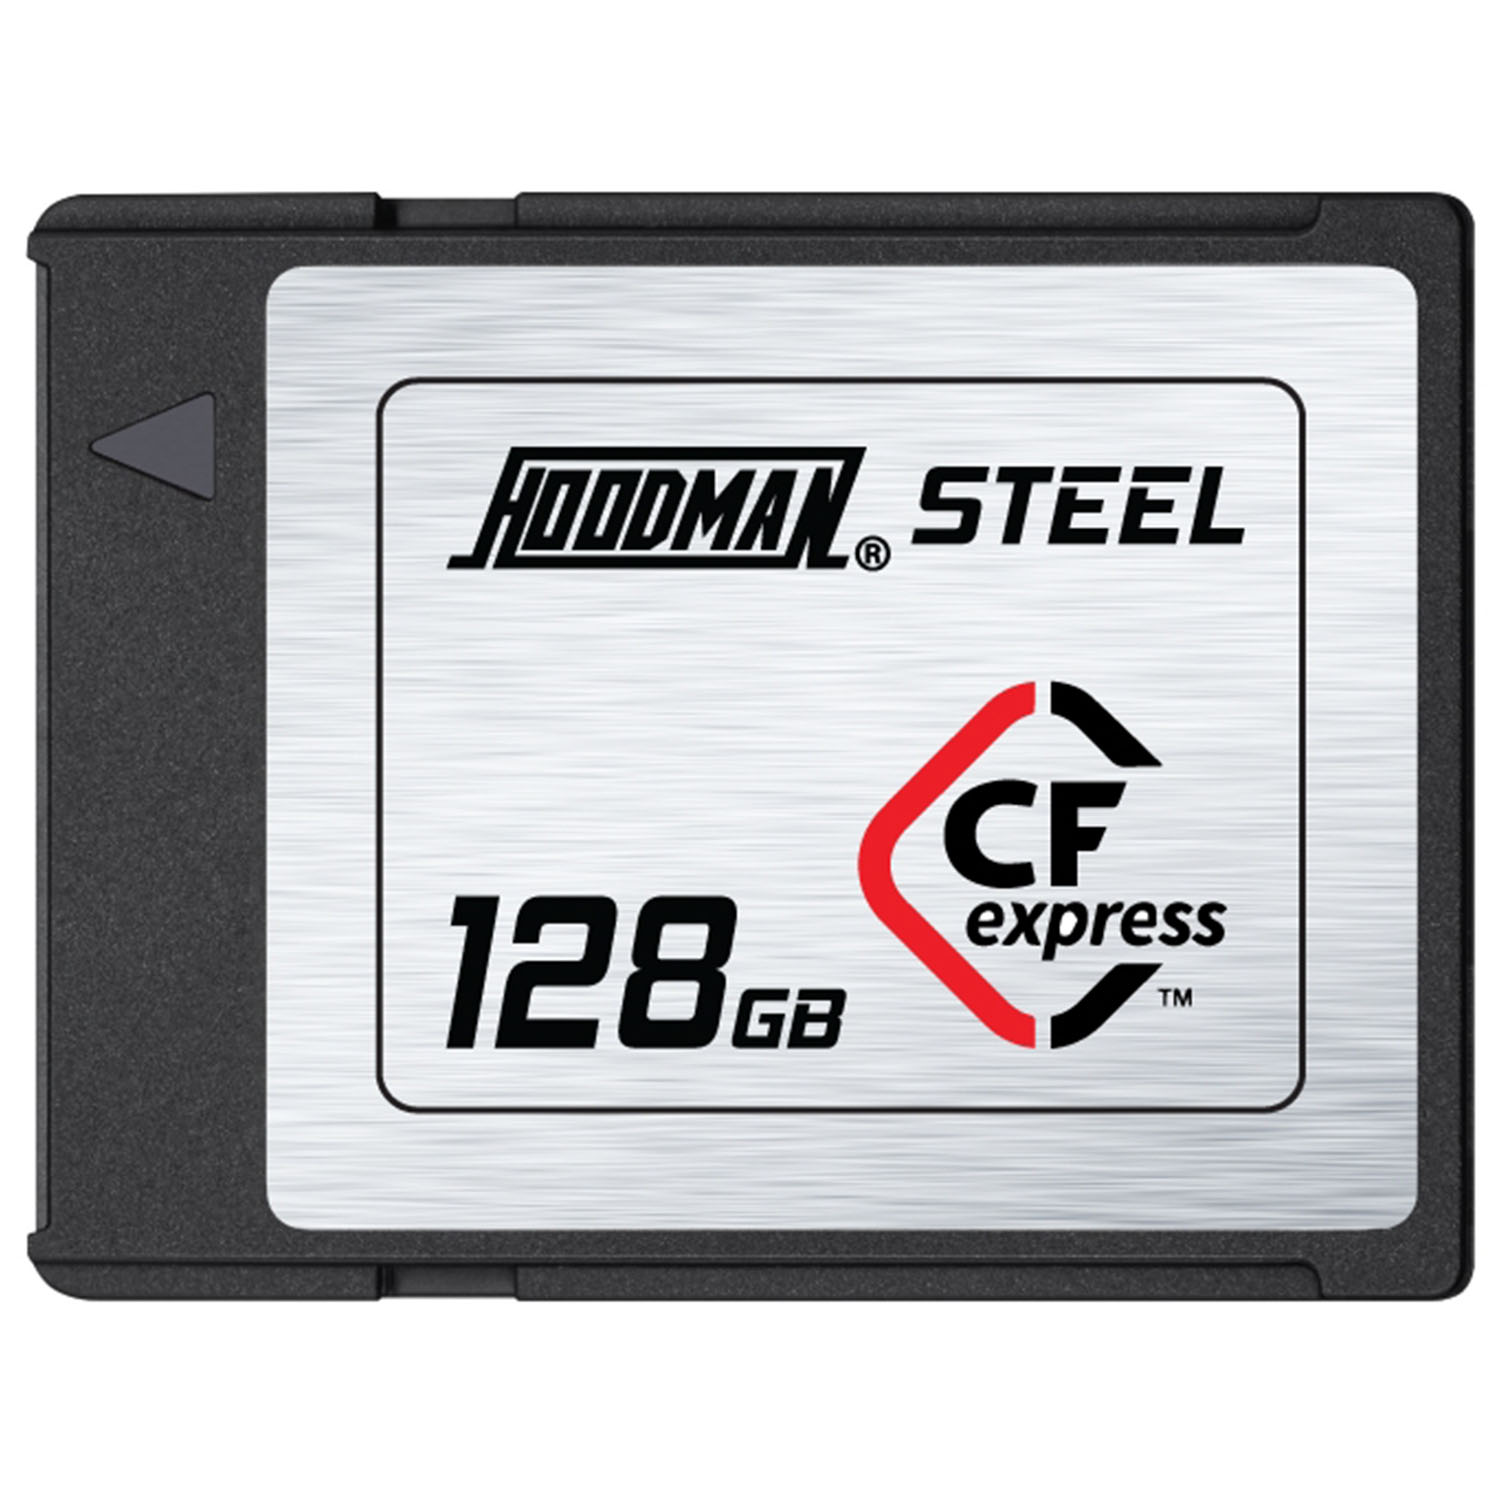 Hoodman CF Express Memory Card